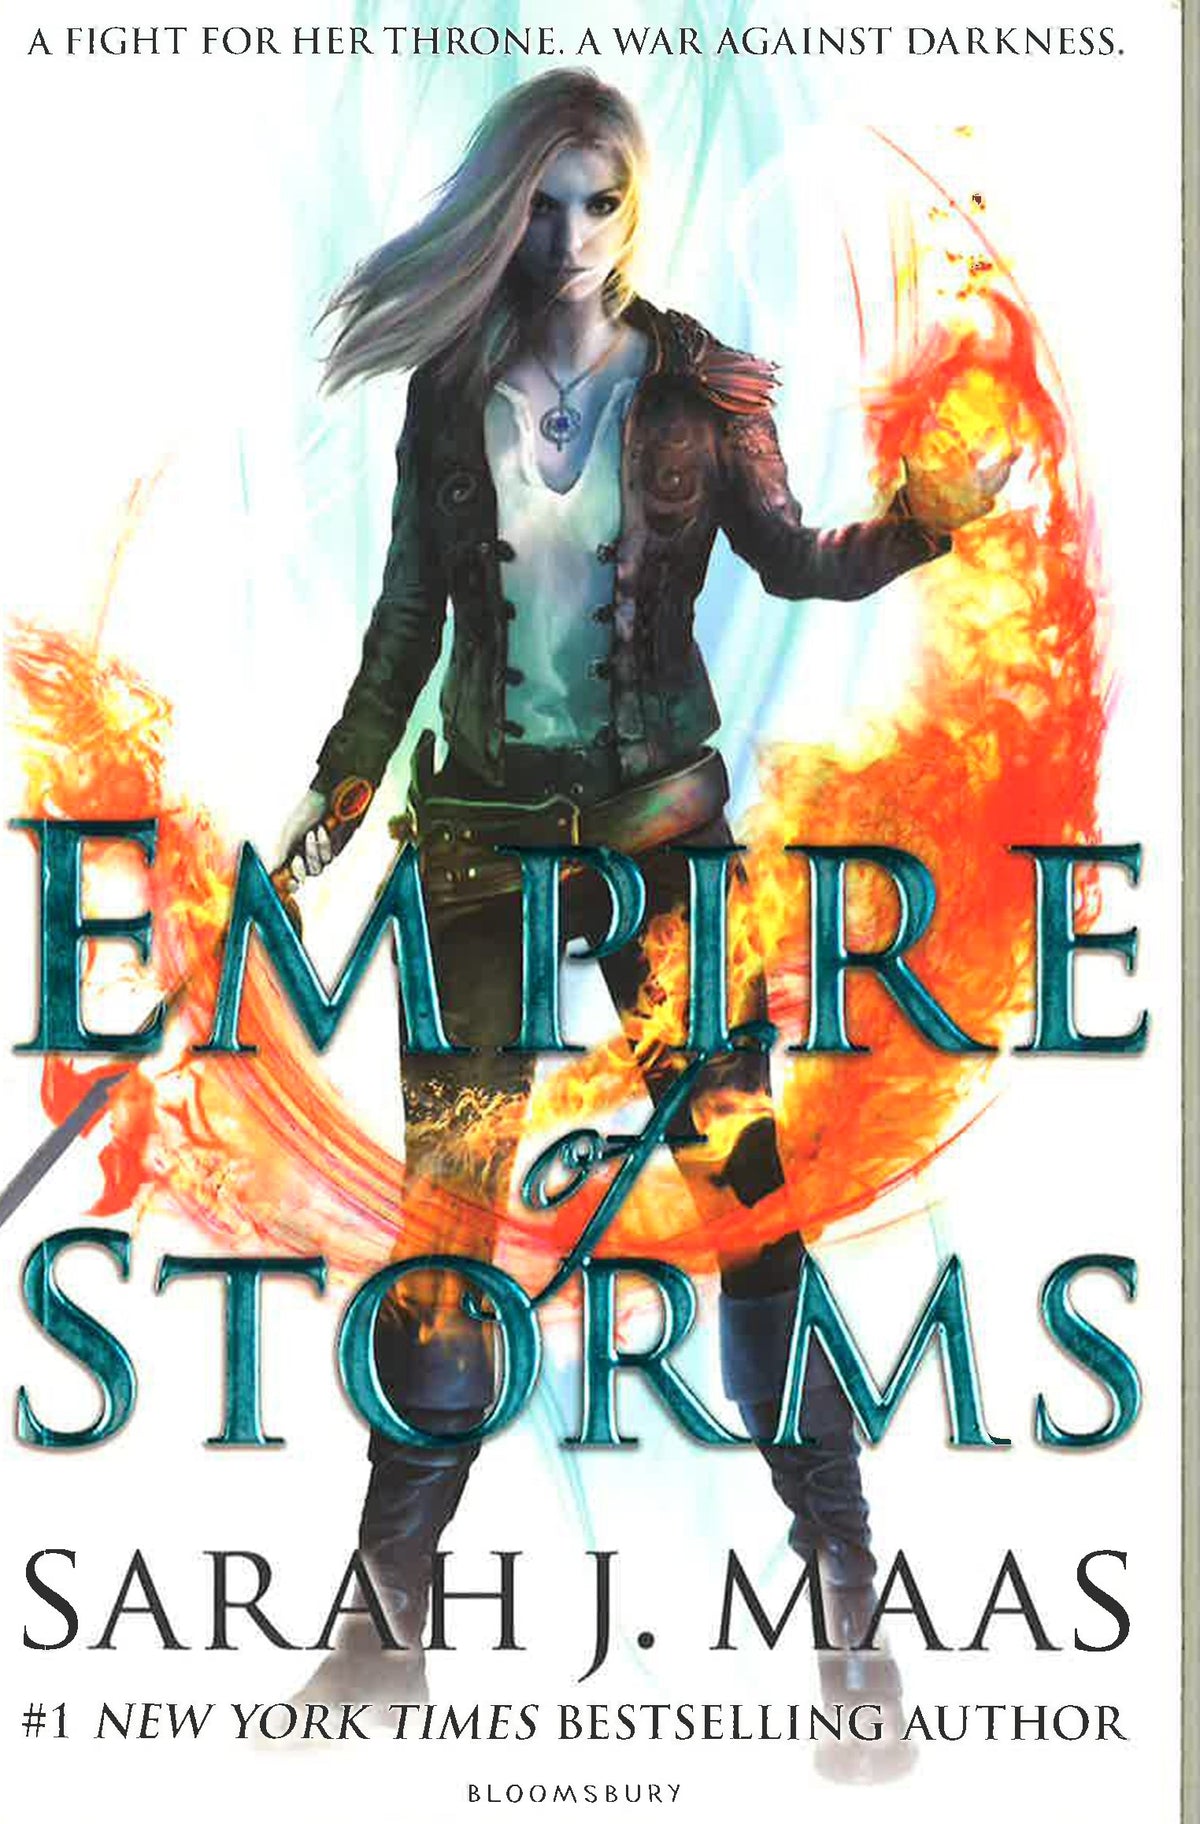 empire storms book